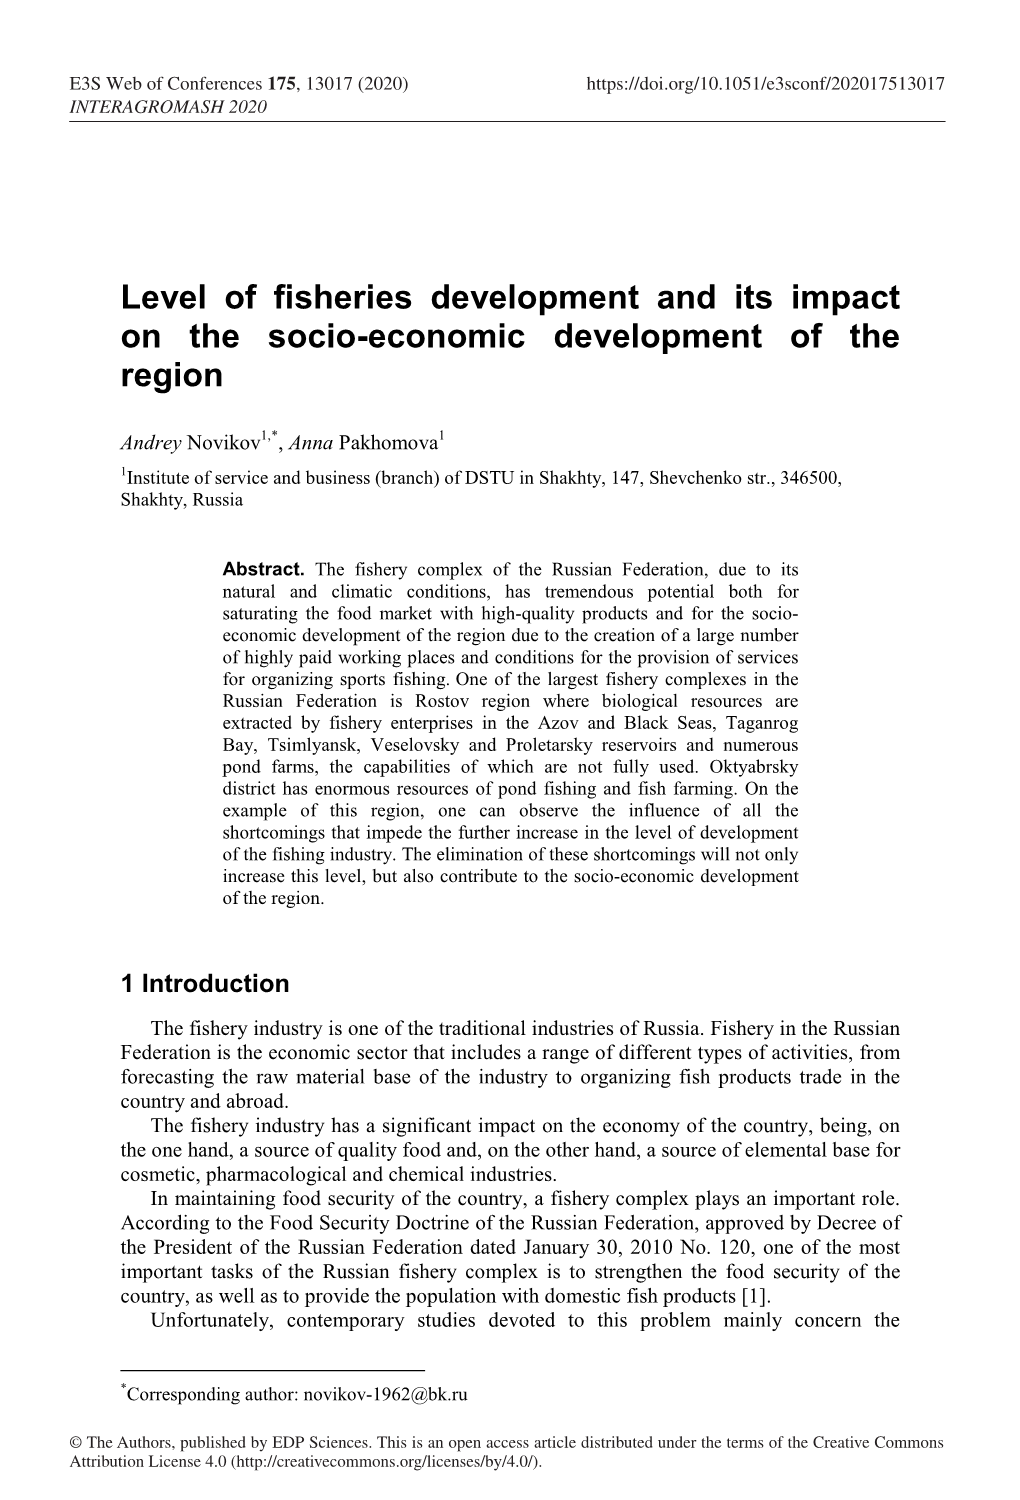 Level of Fisheries Development and Its Impact on the Socio-Economic Development of the Region